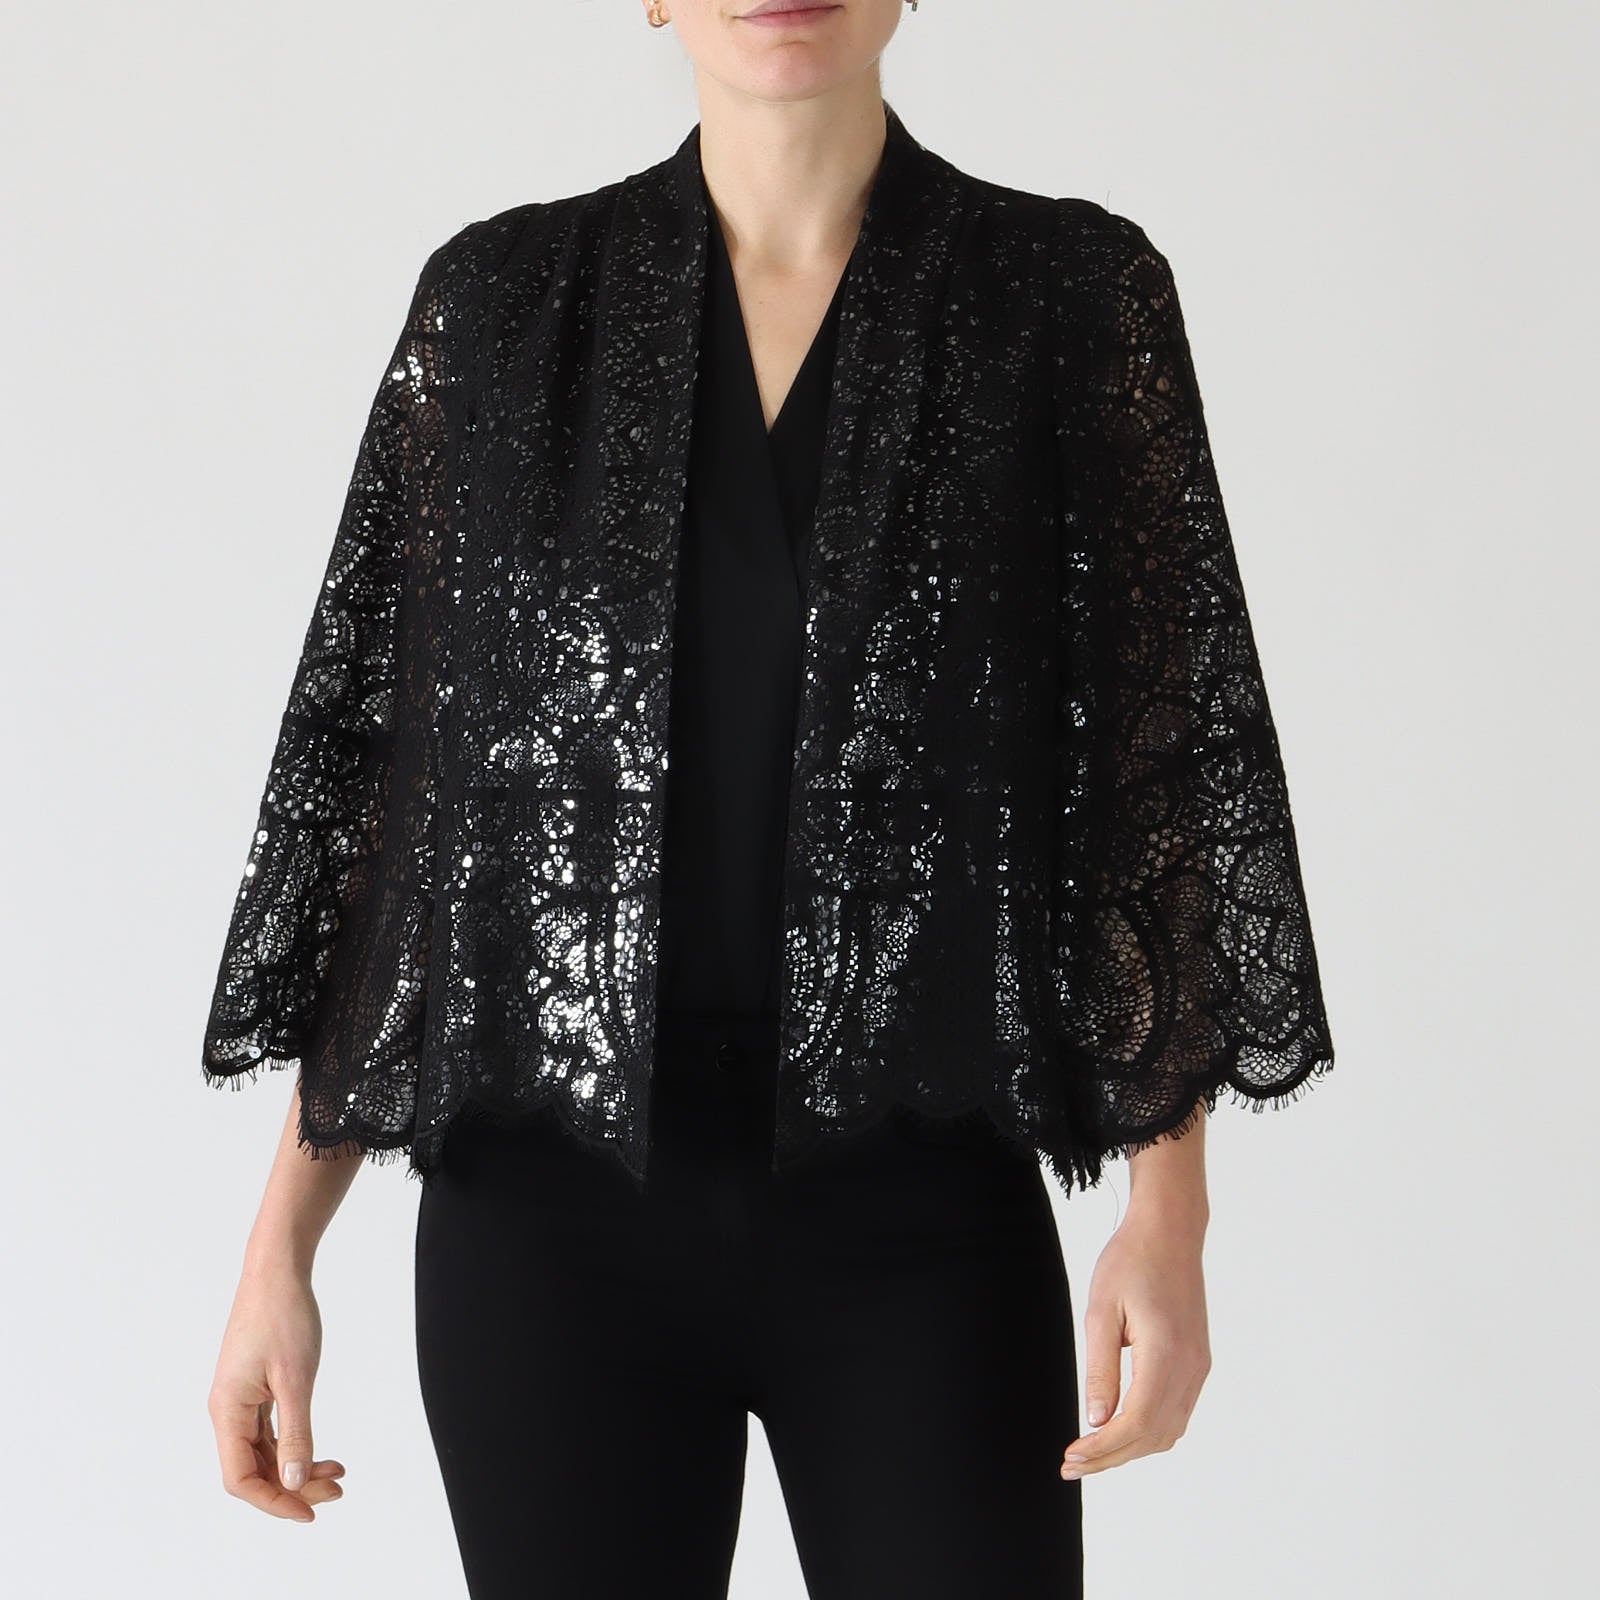 Delilah Black Sequin Lace Jacket